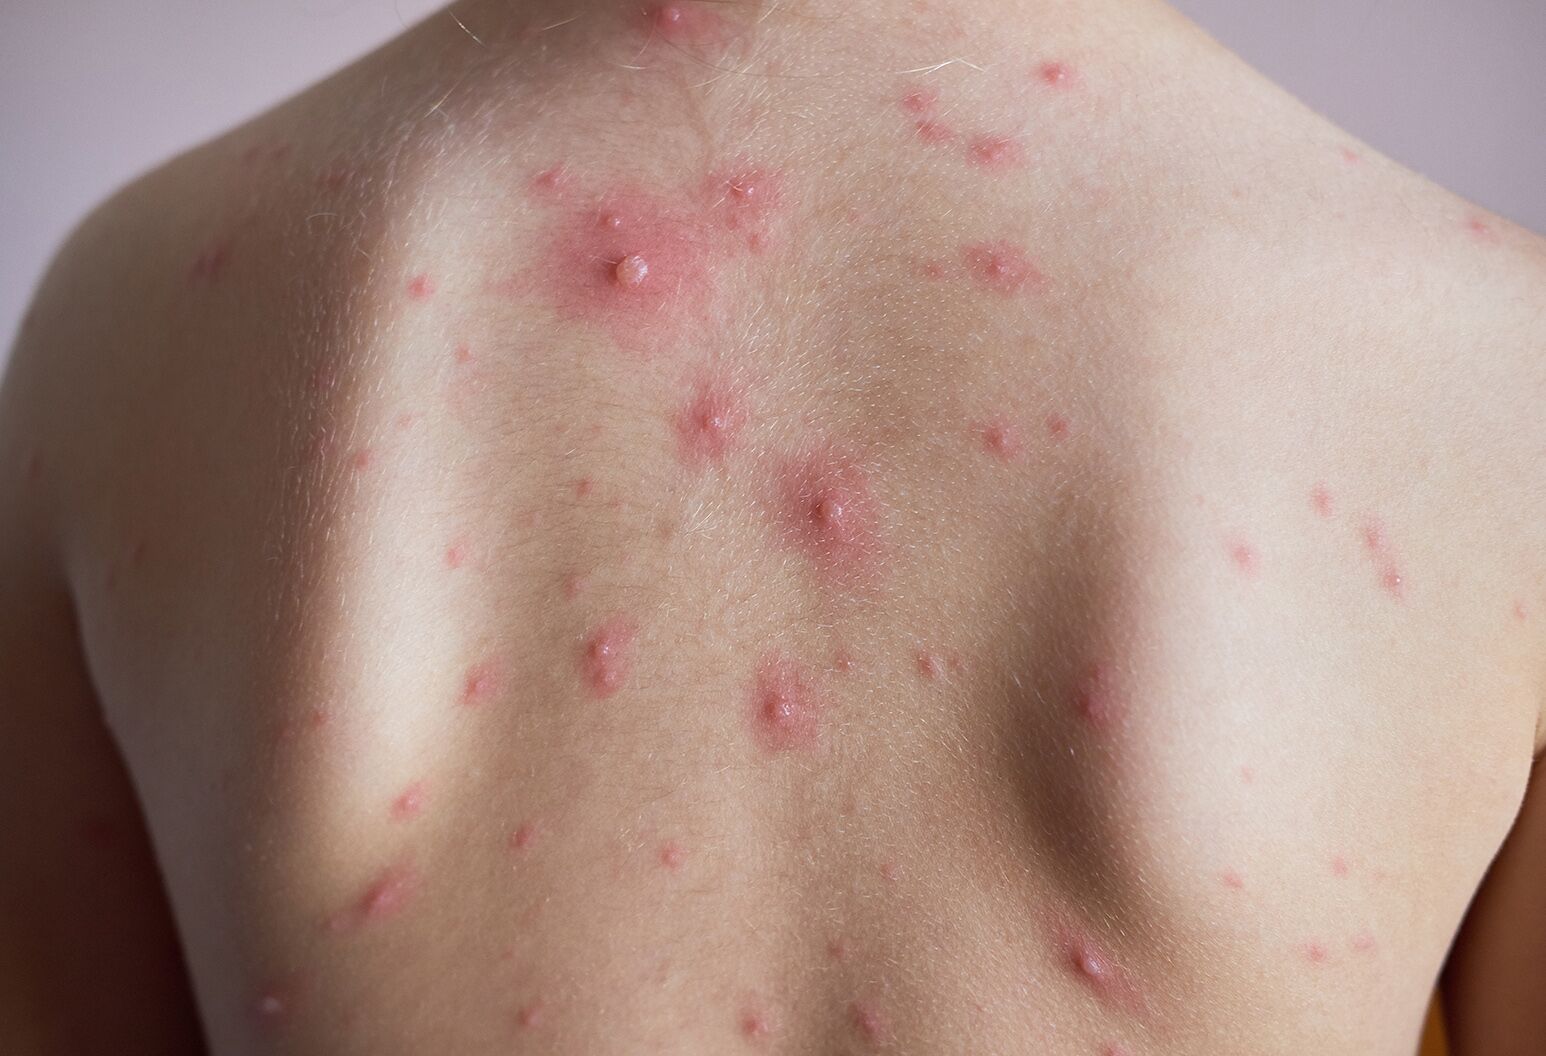 Rashes on kids: Common childhood skin rashes